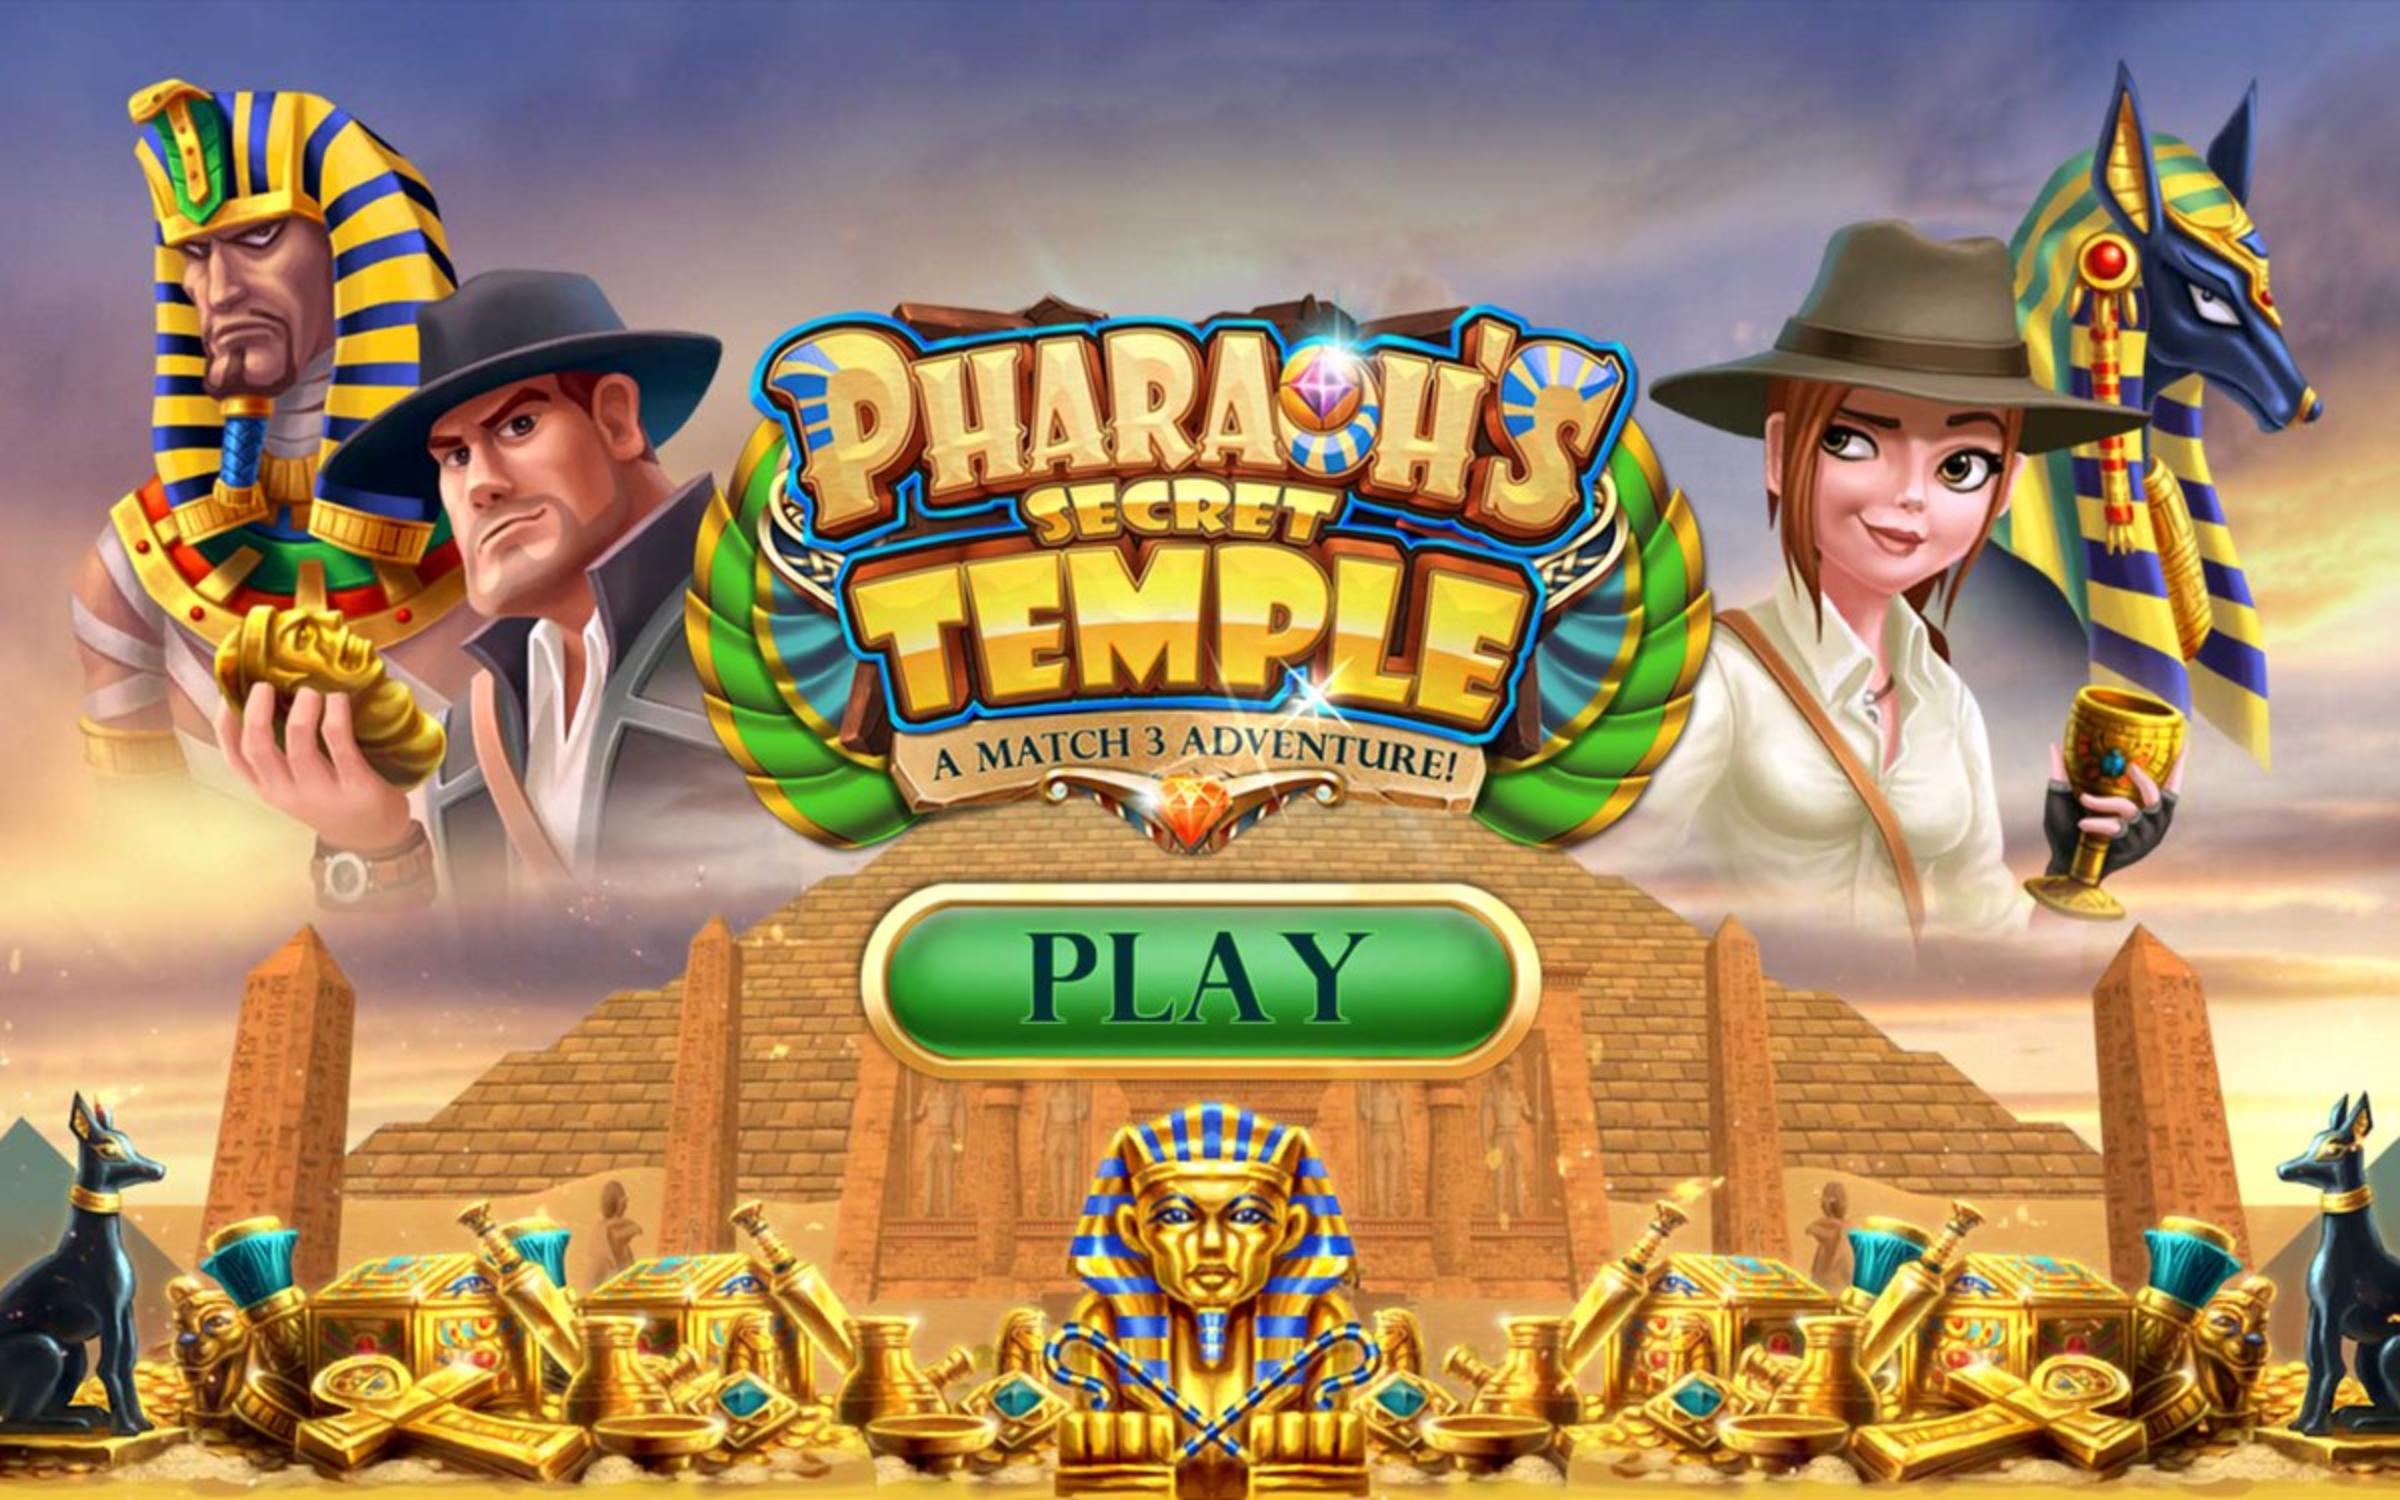 Pharaohs Secret Temple demo